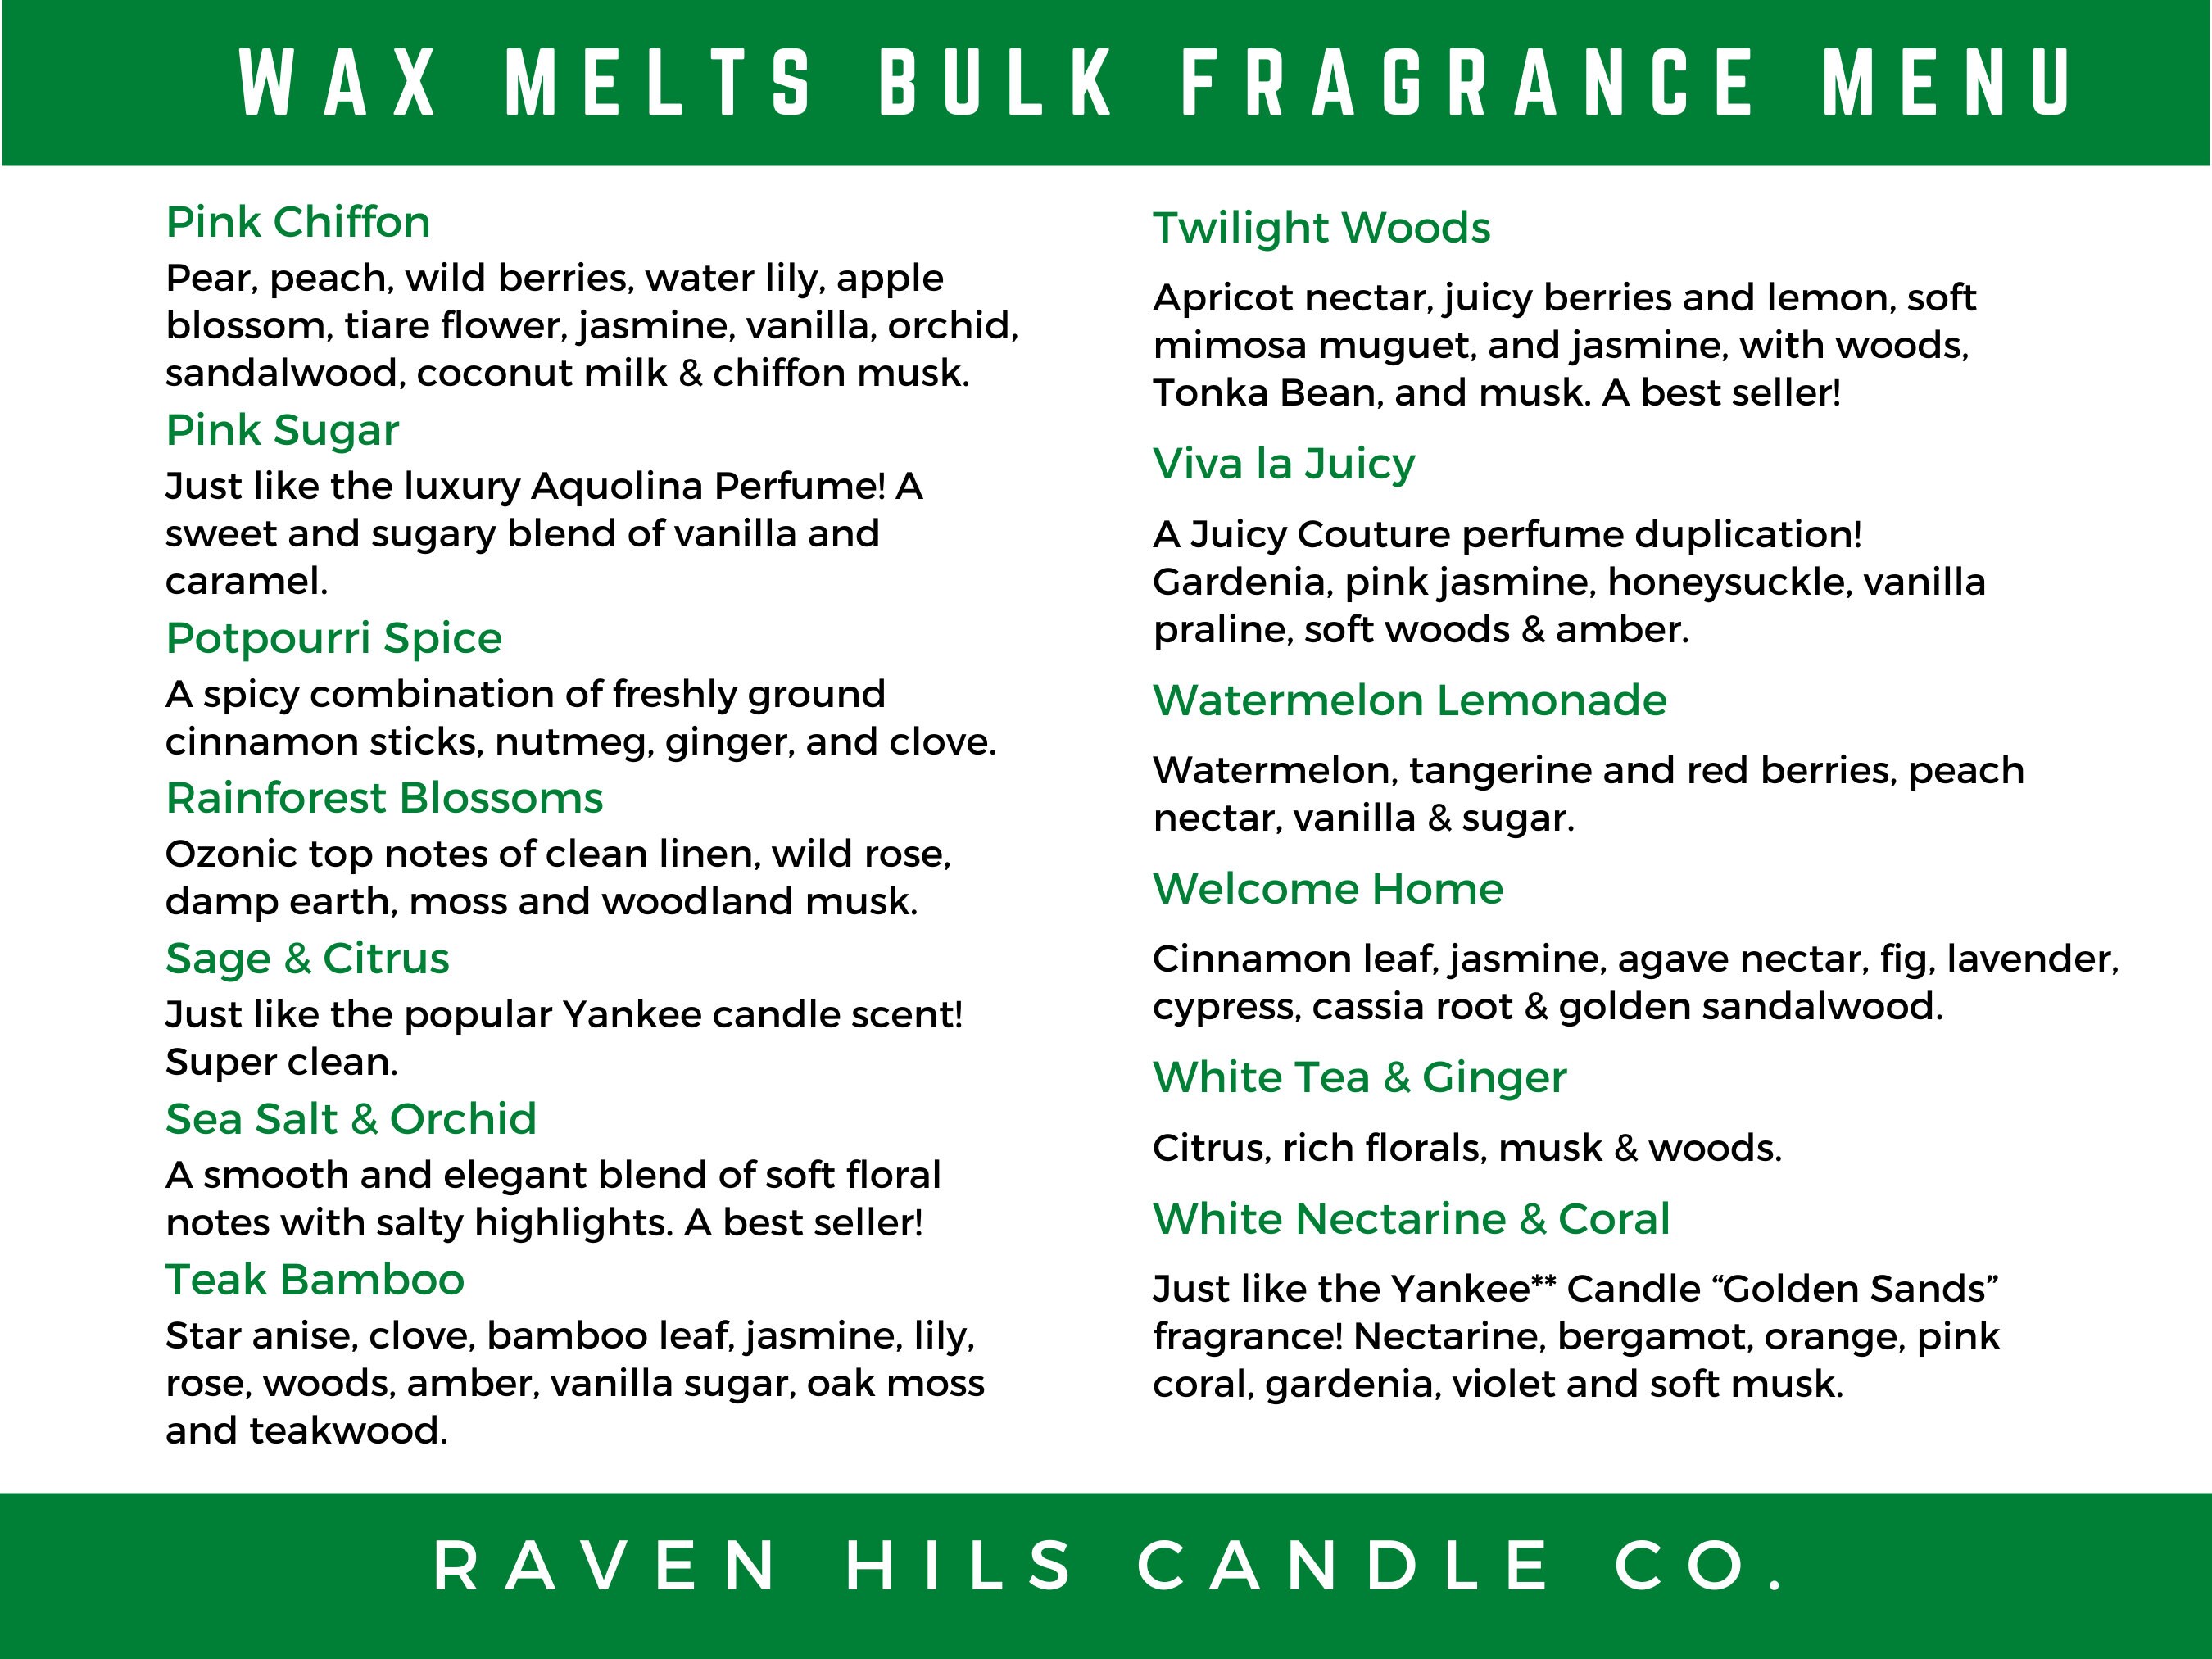 Yankee Candle Wax Melt Amber & Sandalwood - Scented Wax Melts